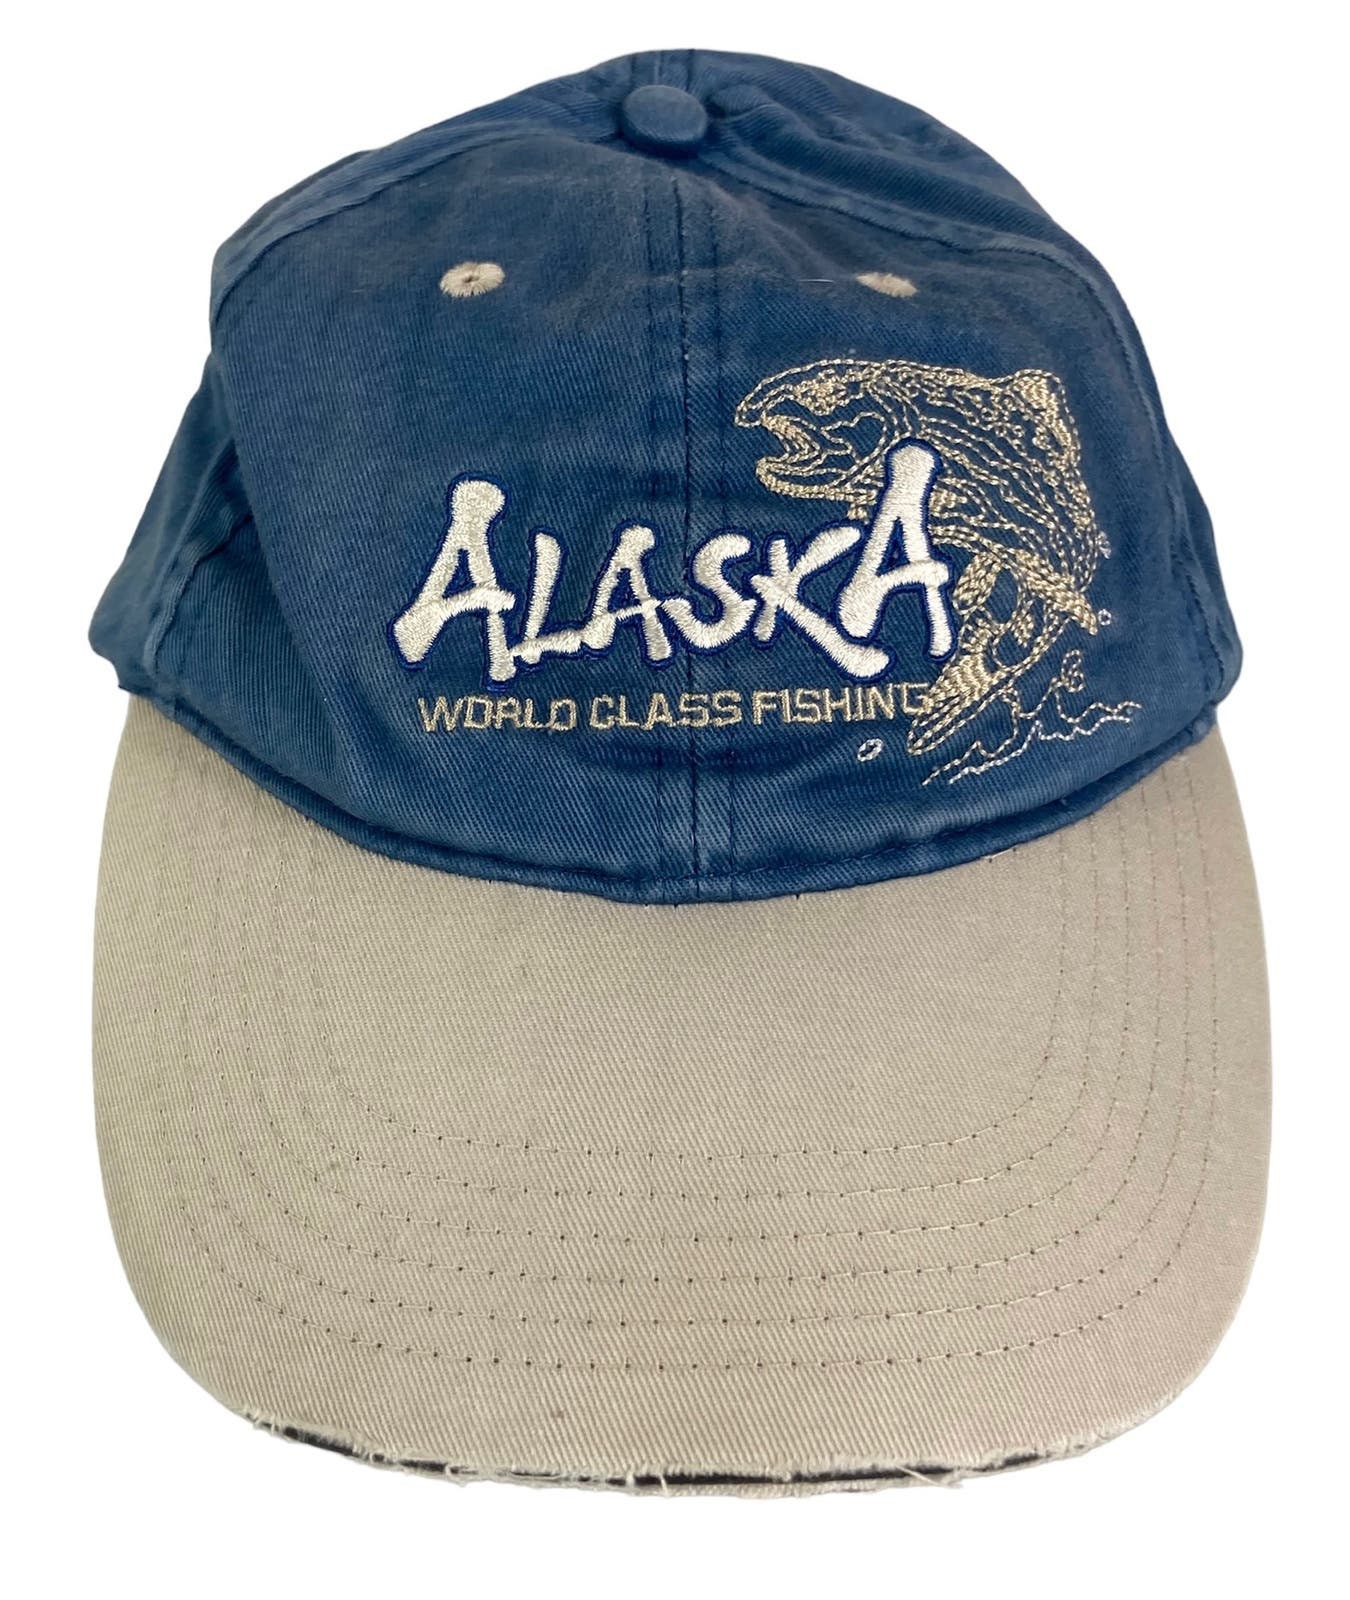 Vintage Alaska World Class Fishing Hat Blue Strapback Rare Collectible